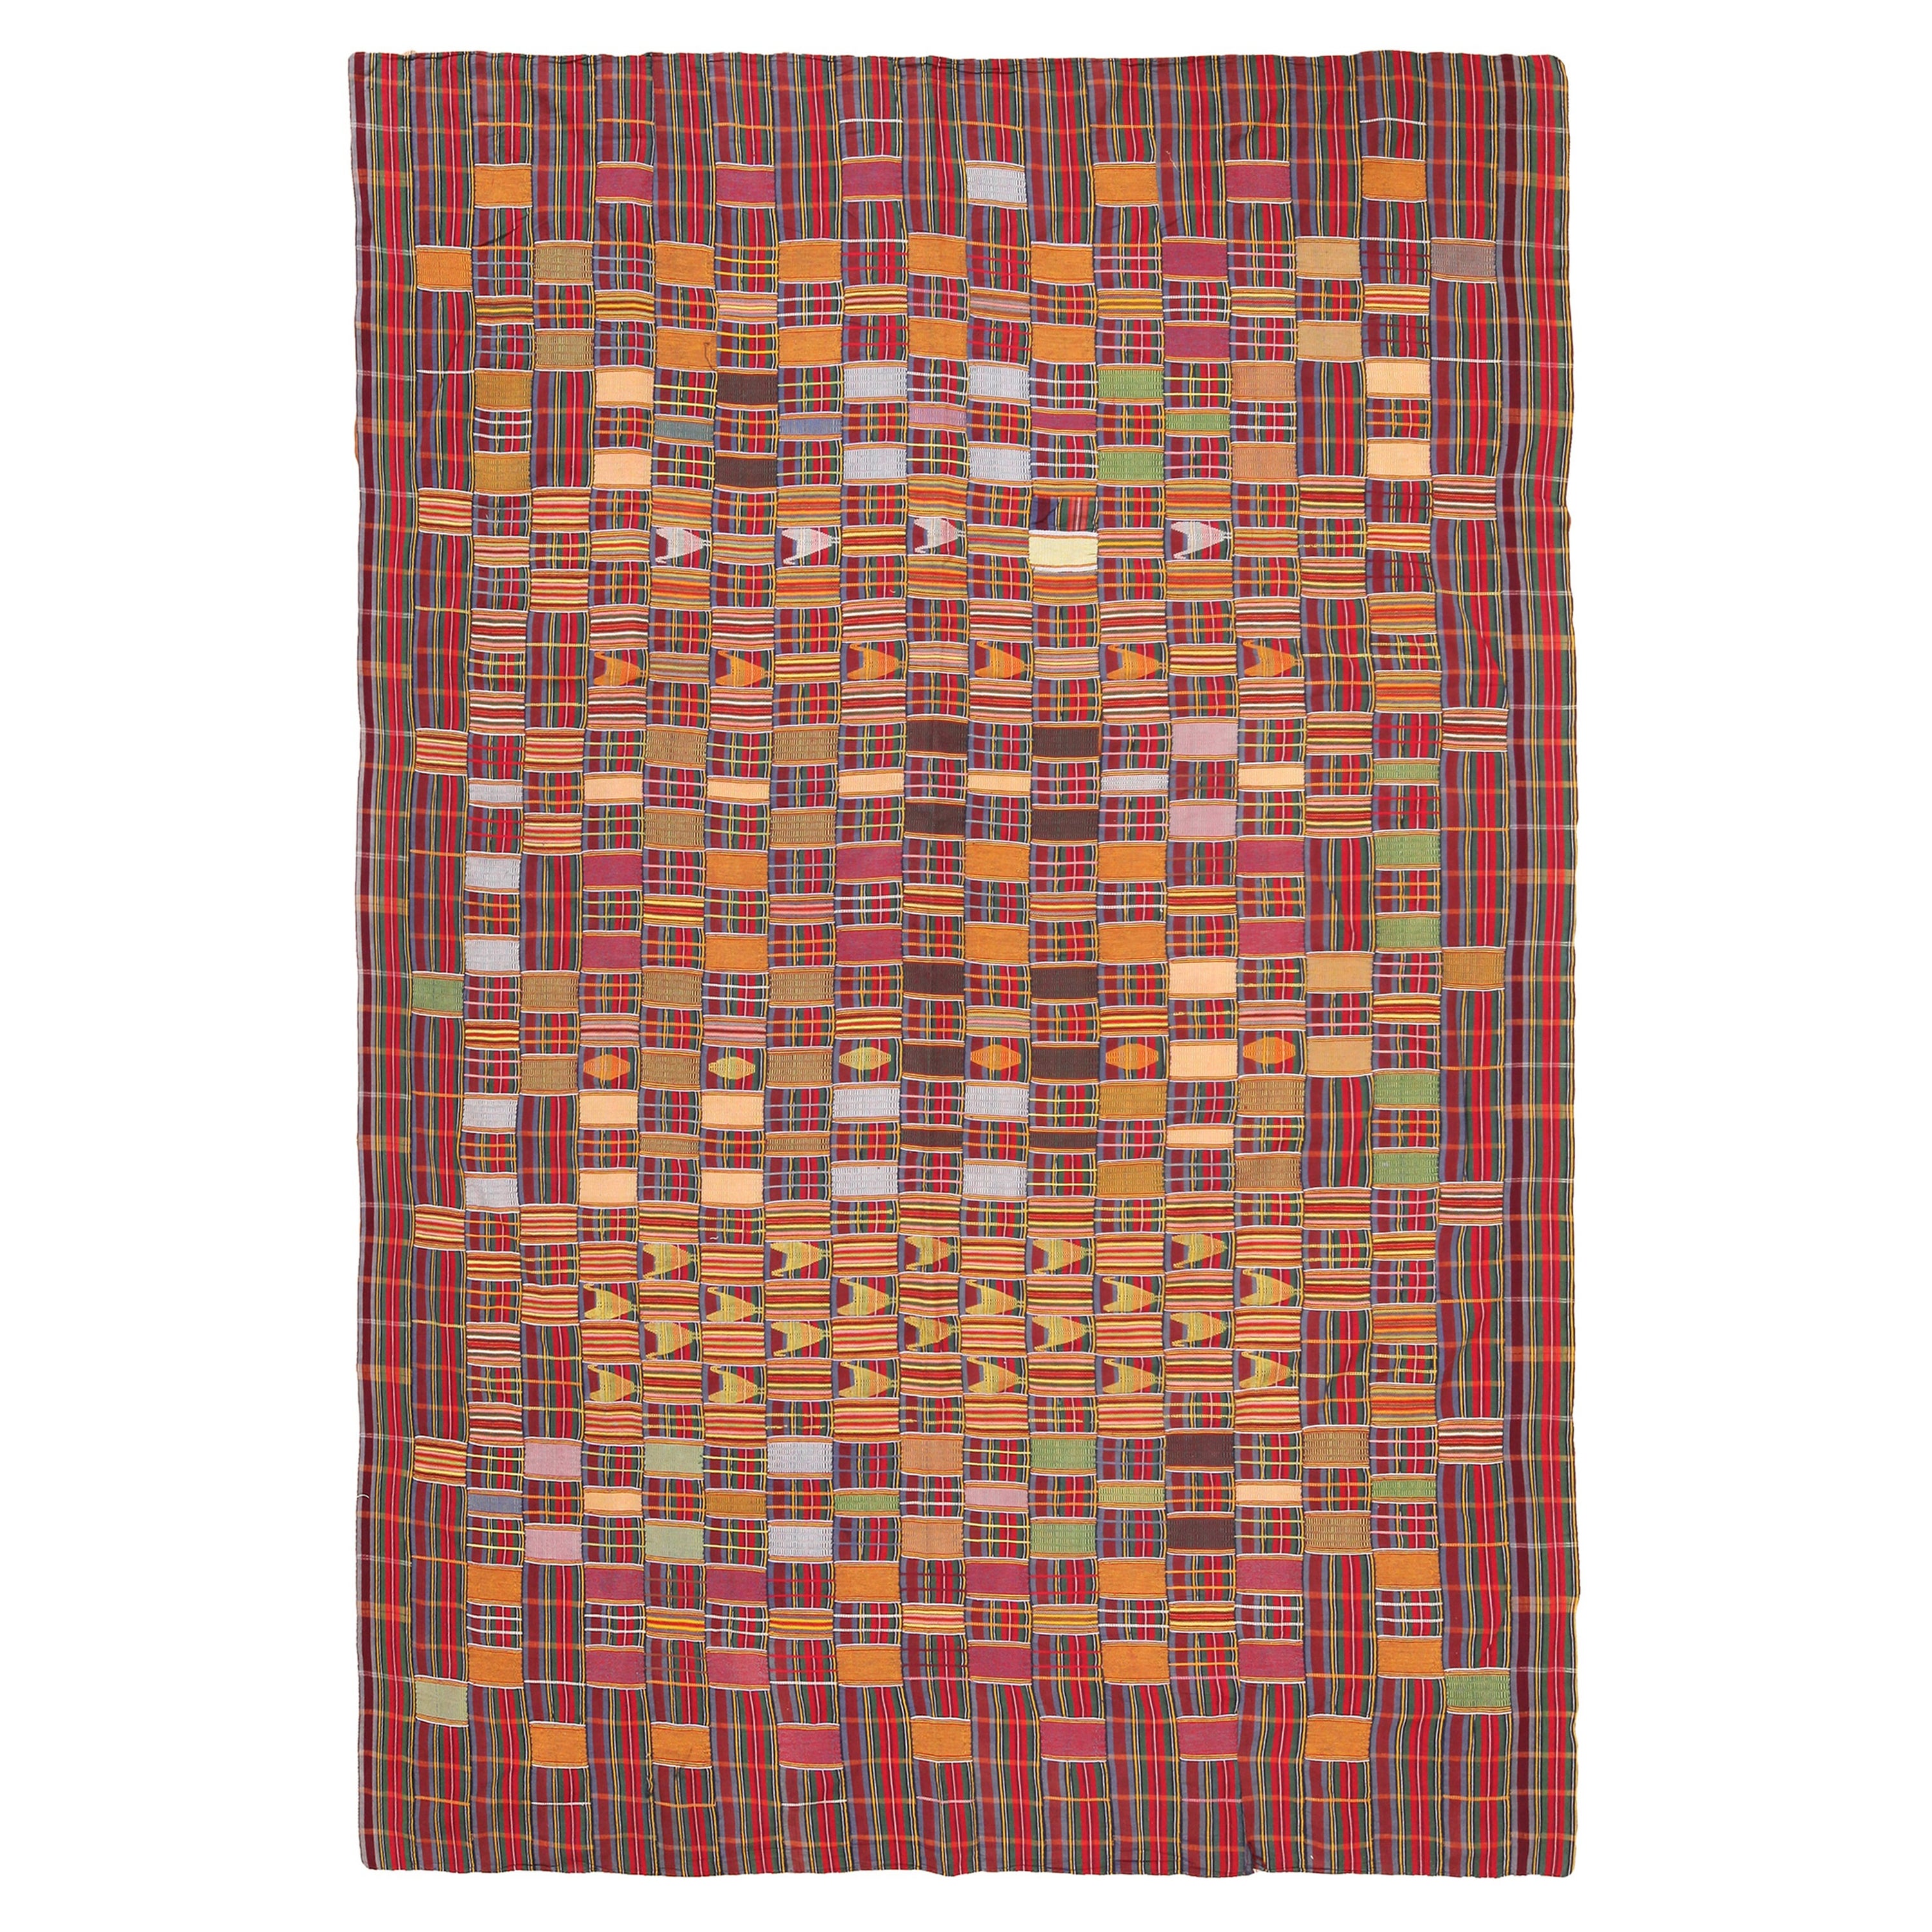 Beautiful Antique African Ewe Kente Cloth Textile 5'7" x 8'9"